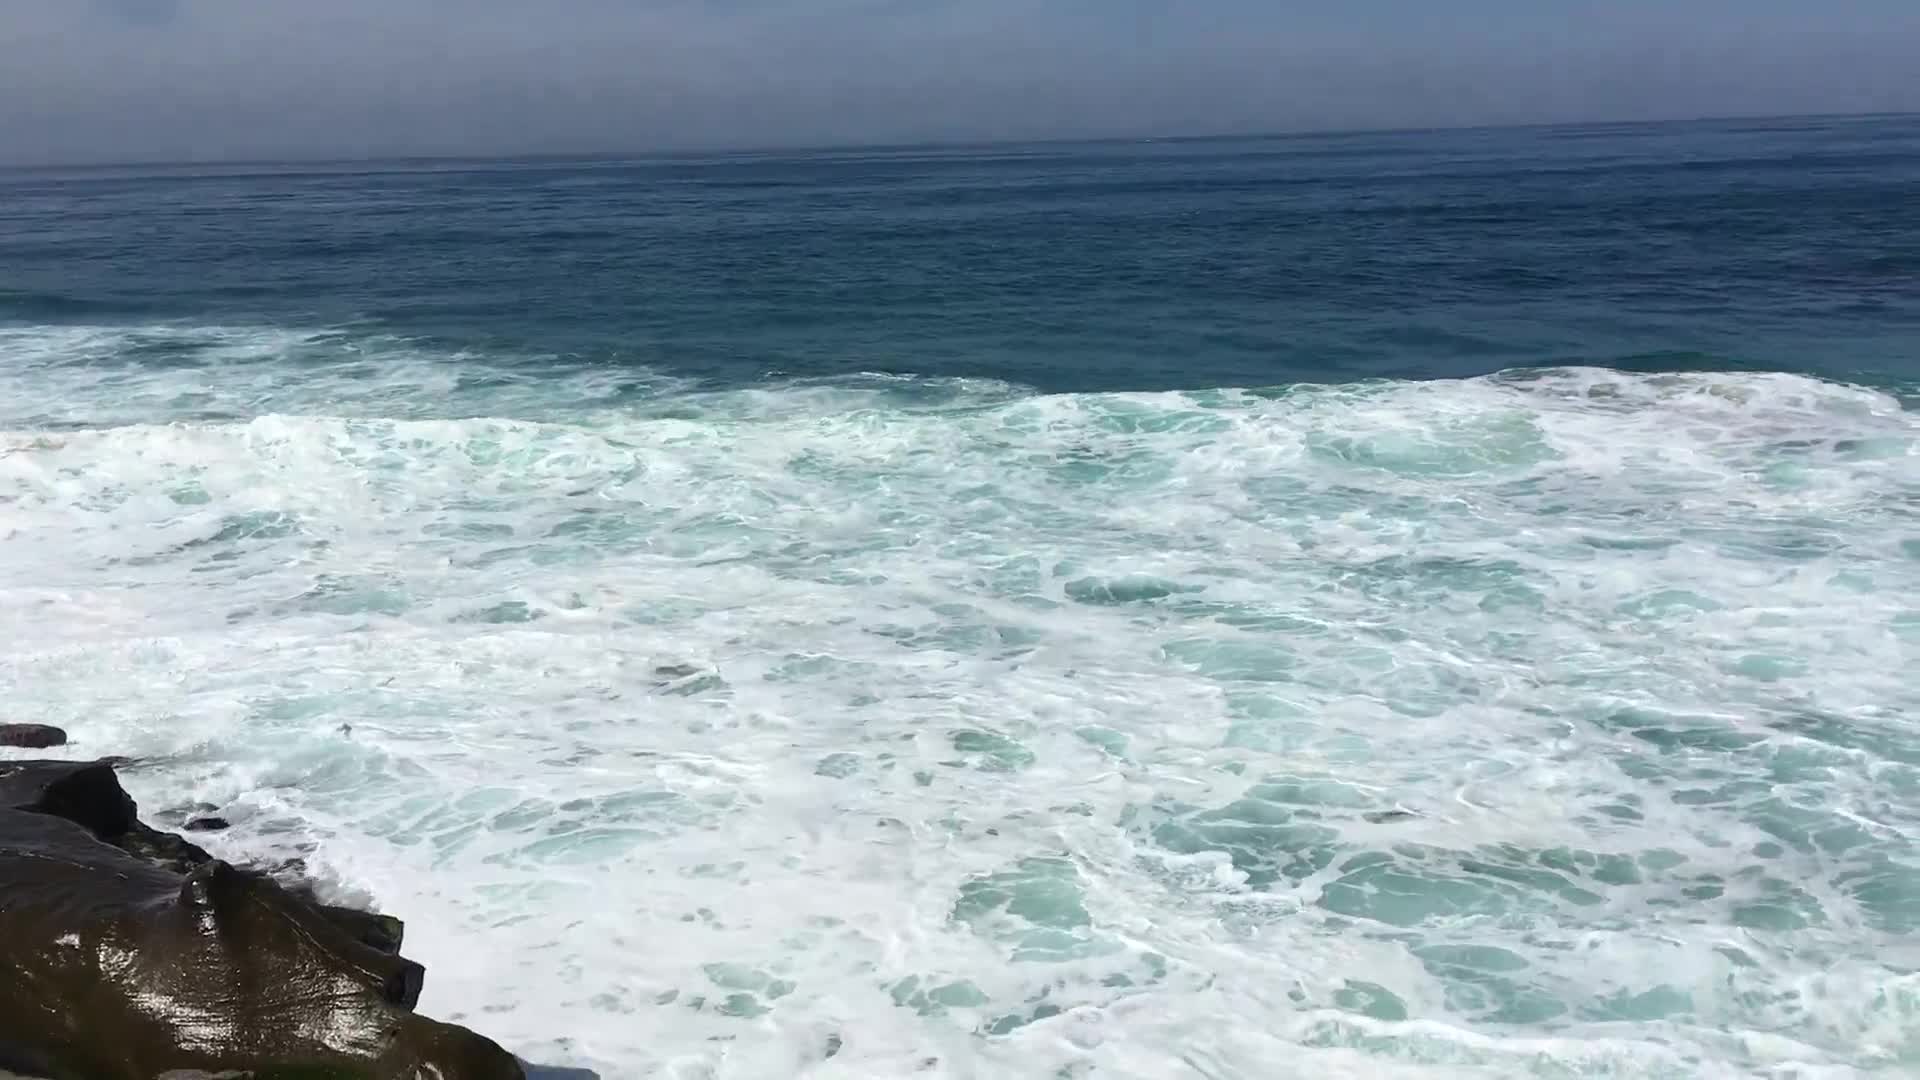 San Diego Waves